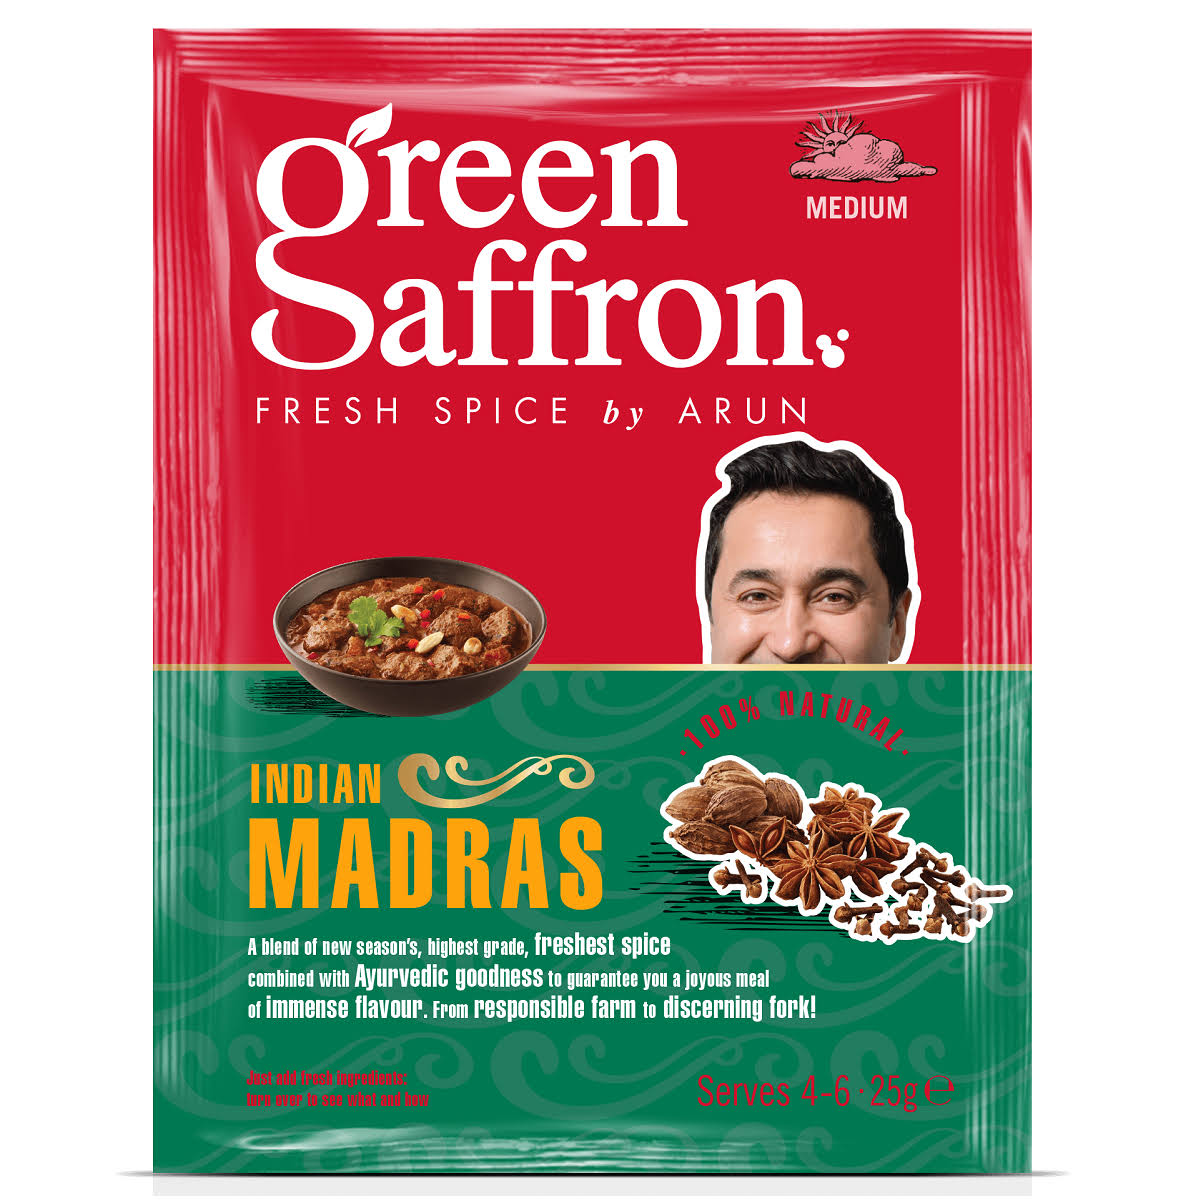 Green Saffron Indian Madras - 25g, Medium